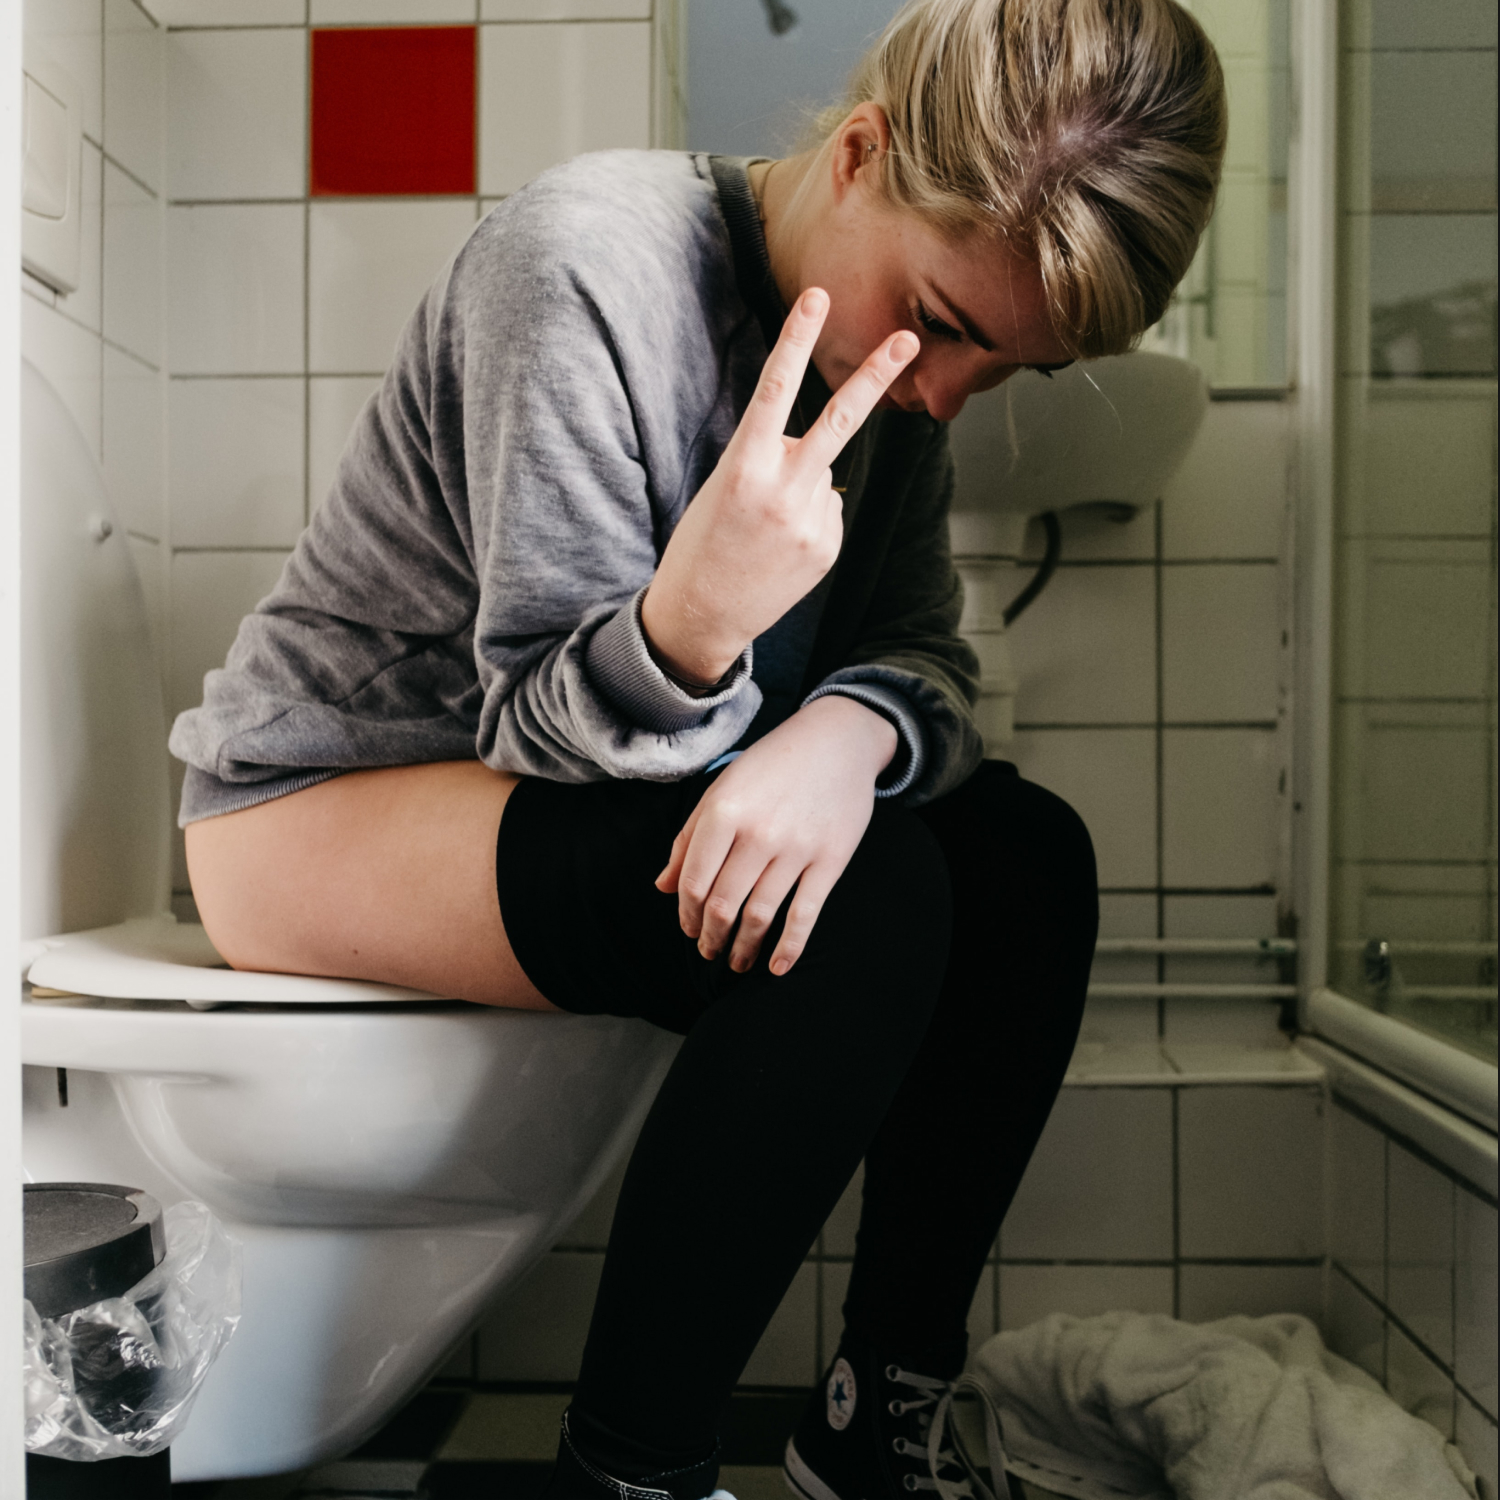 Female Poop Desperation Stories grade girls